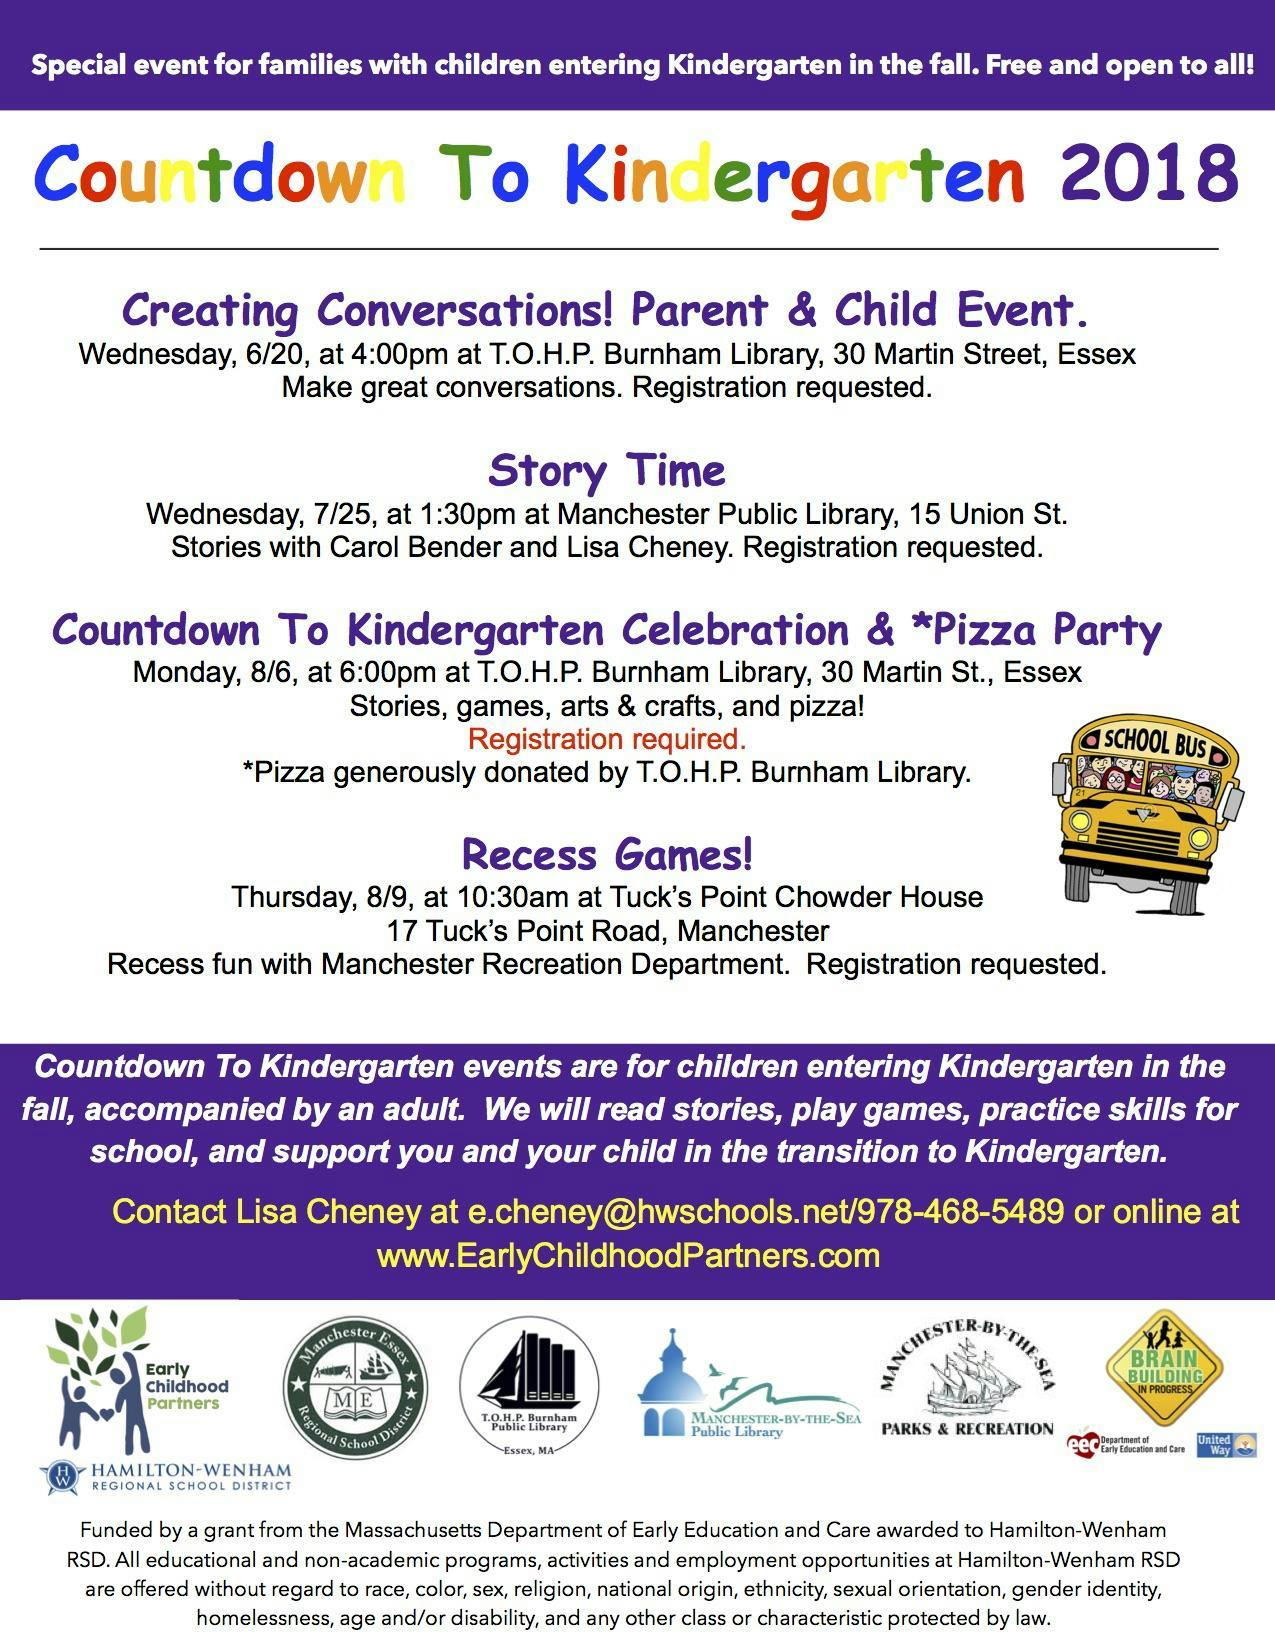 Countdown To Kindergarten - Creating Conversations Parent & Child Event